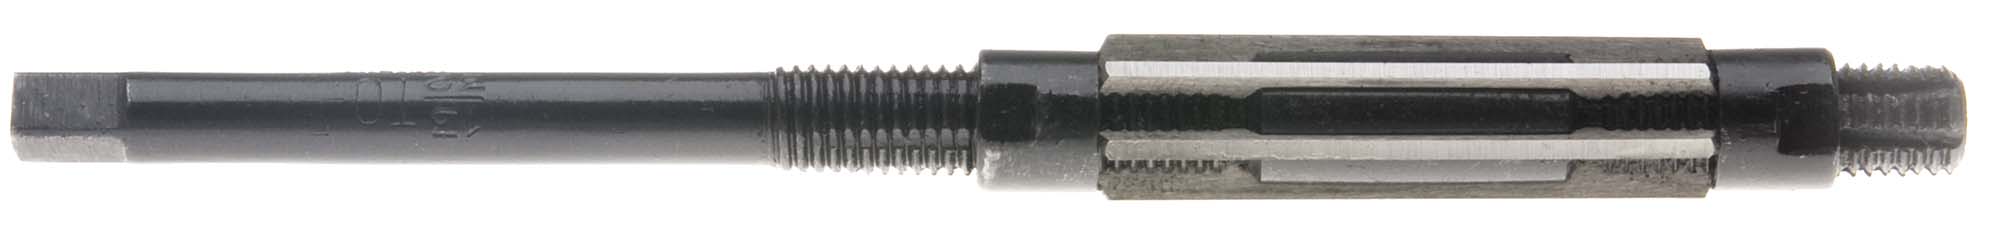 RMBL-L High Speed Steel Adjustable Blade Reamer, 1 1/2"-1 13/16"